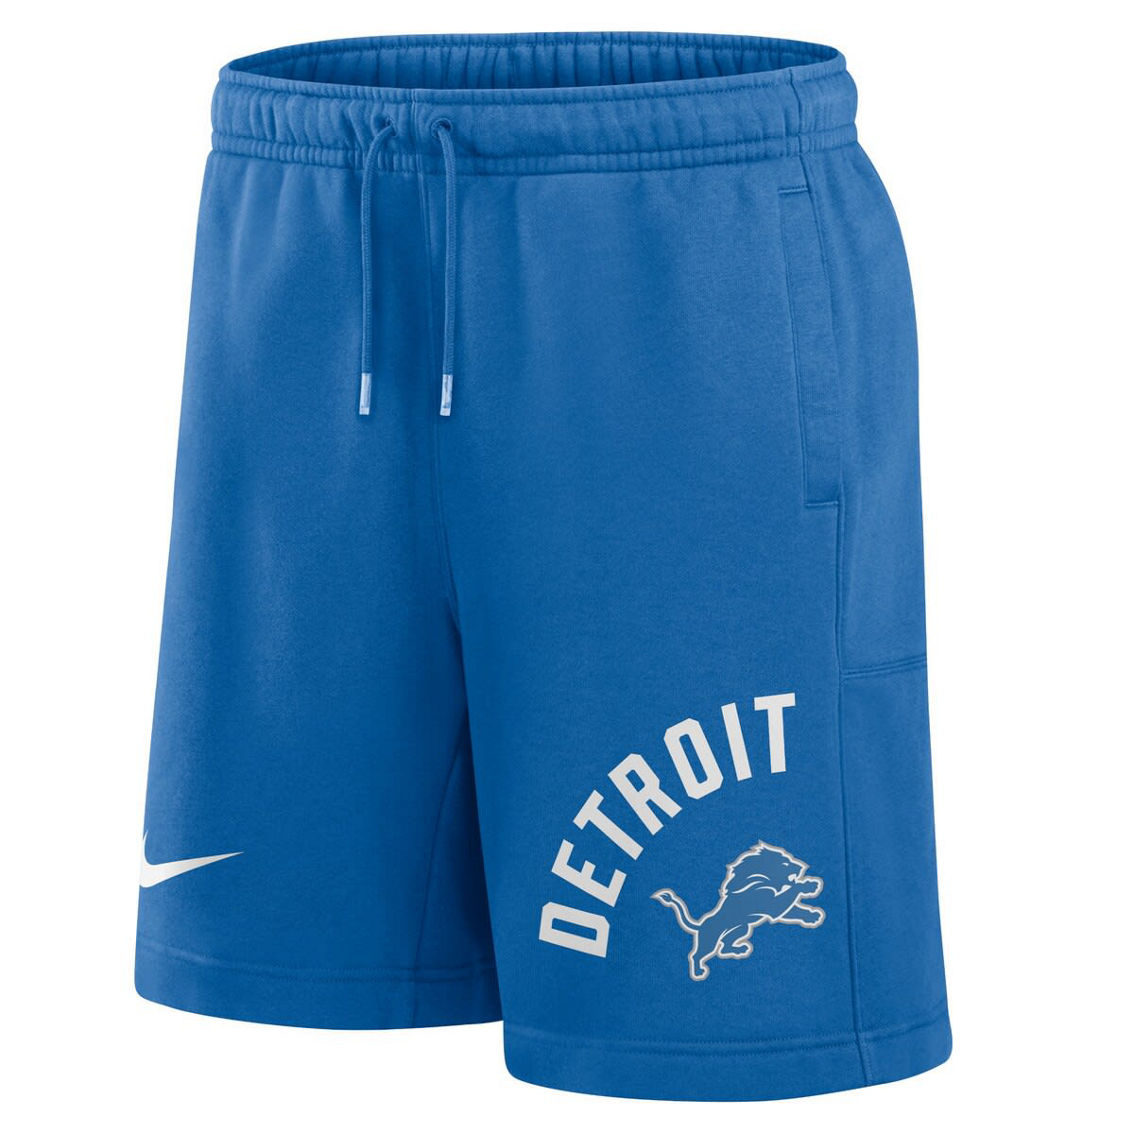 Nike Men's Blue Detroit Lions Arched Kicker Shorts - Image 3 of 4